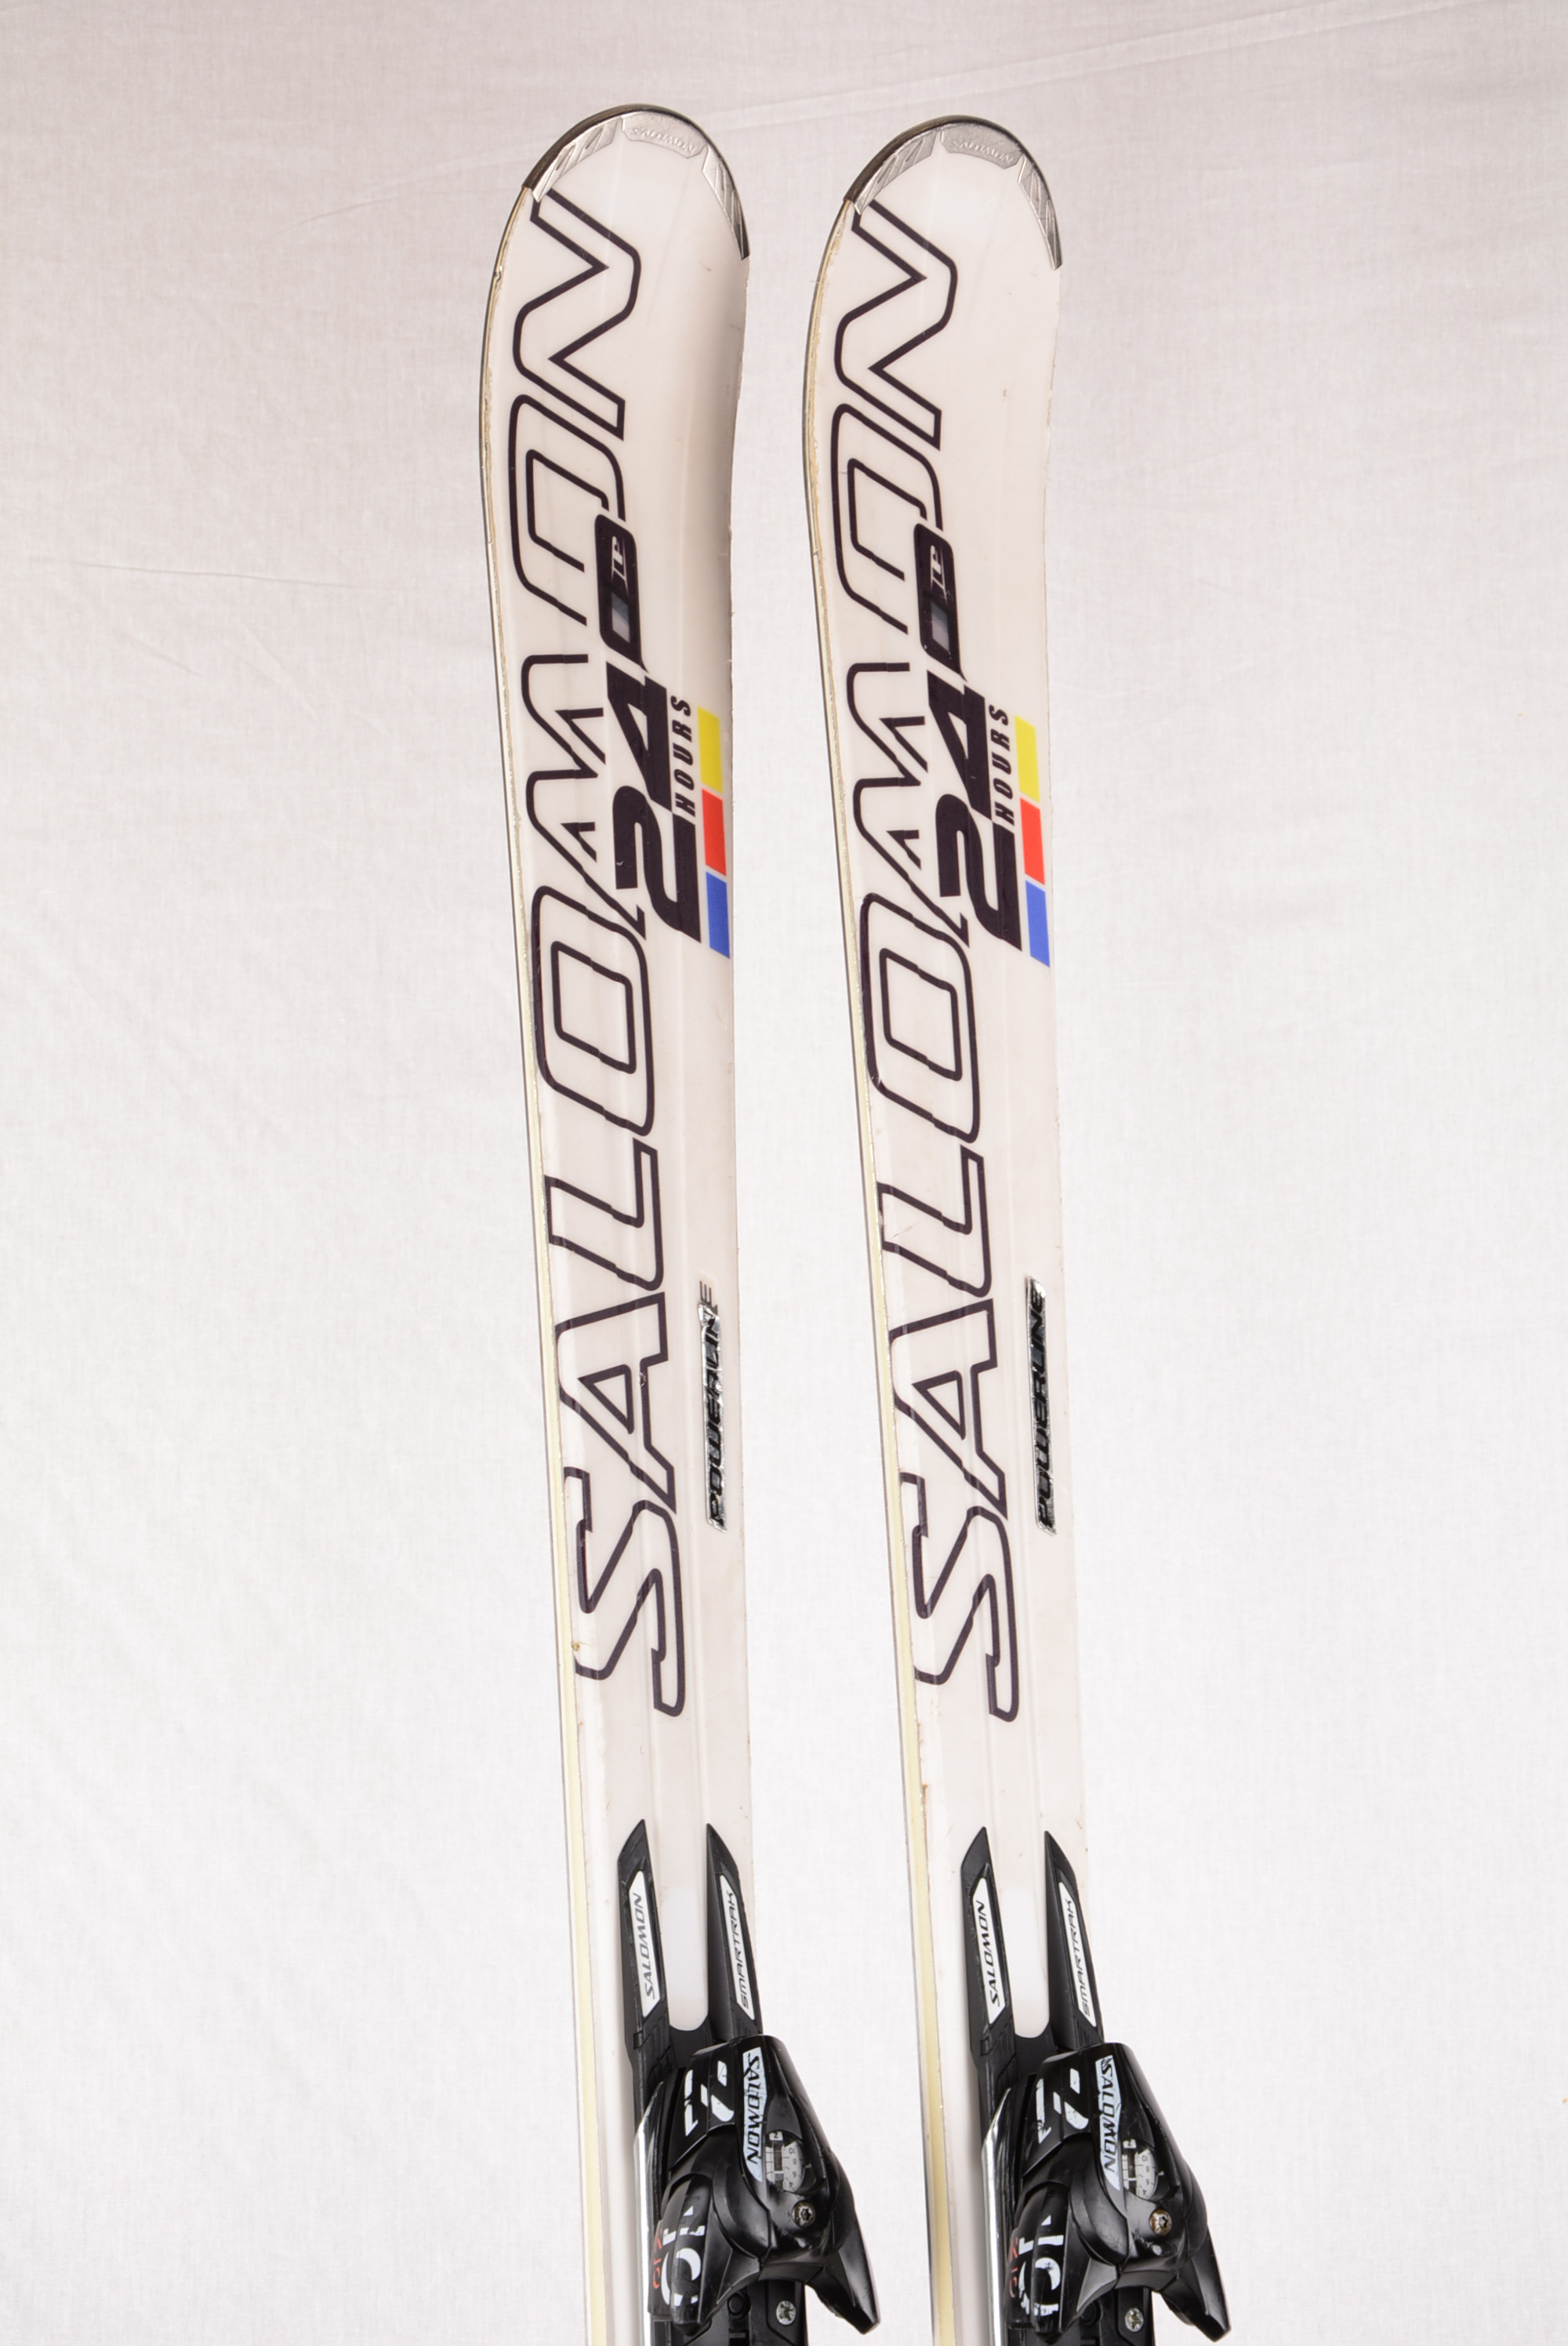 skis SALOMON 24 HOURS RACE Ti2 white, POWERLINE, TITANIUM, FULL WOODCORE + Salomon Z10 Mardosport.com